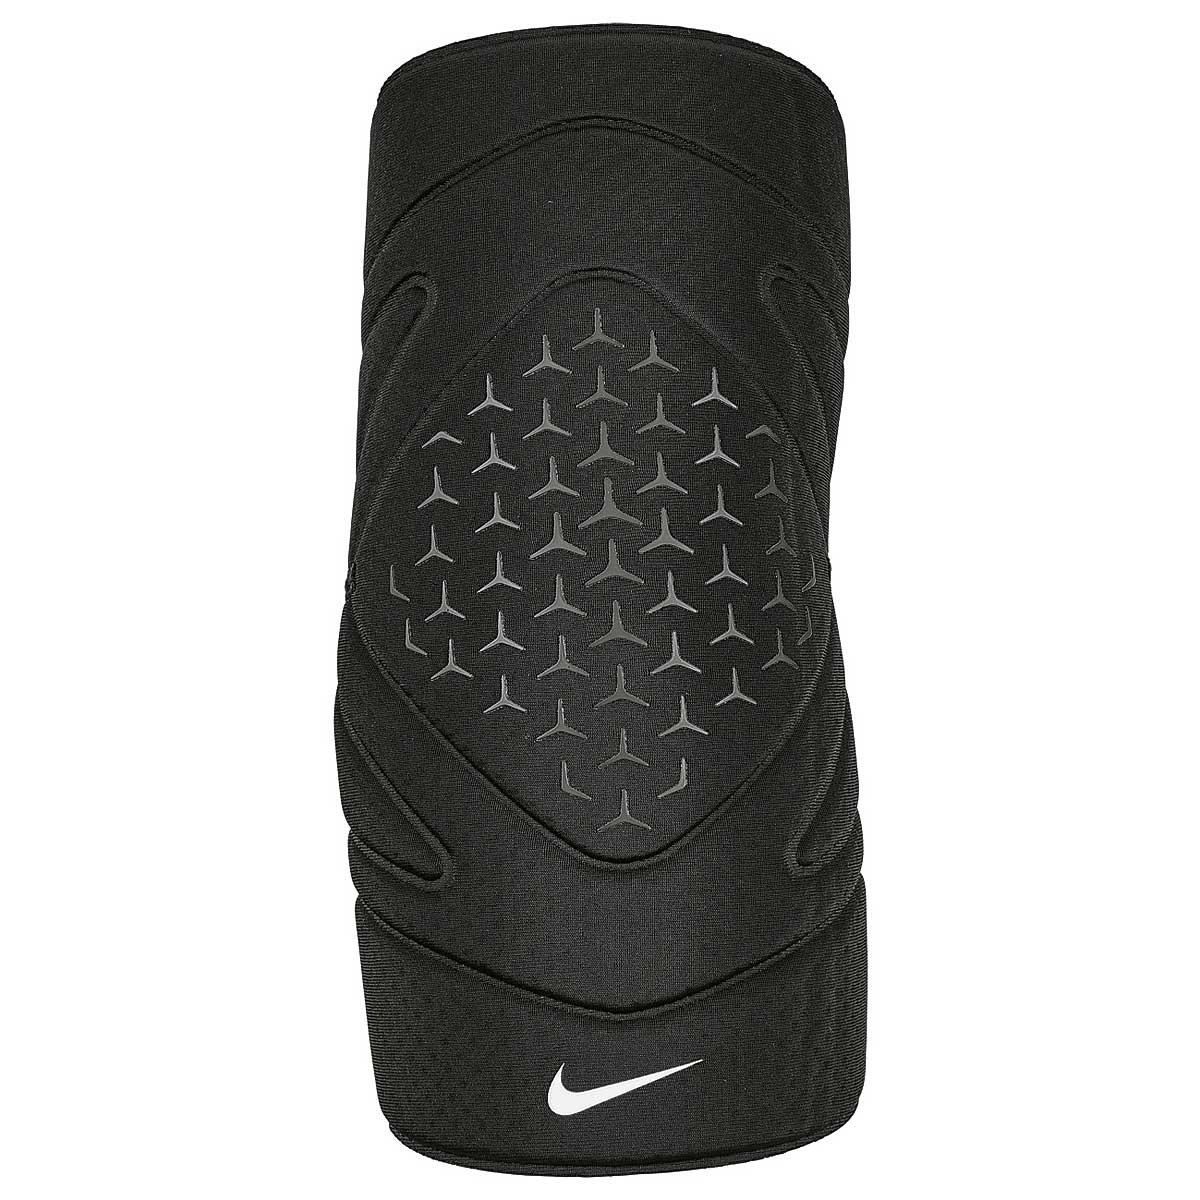 Nike Nike Pro Elbow Sleeve 3.0, Black/White